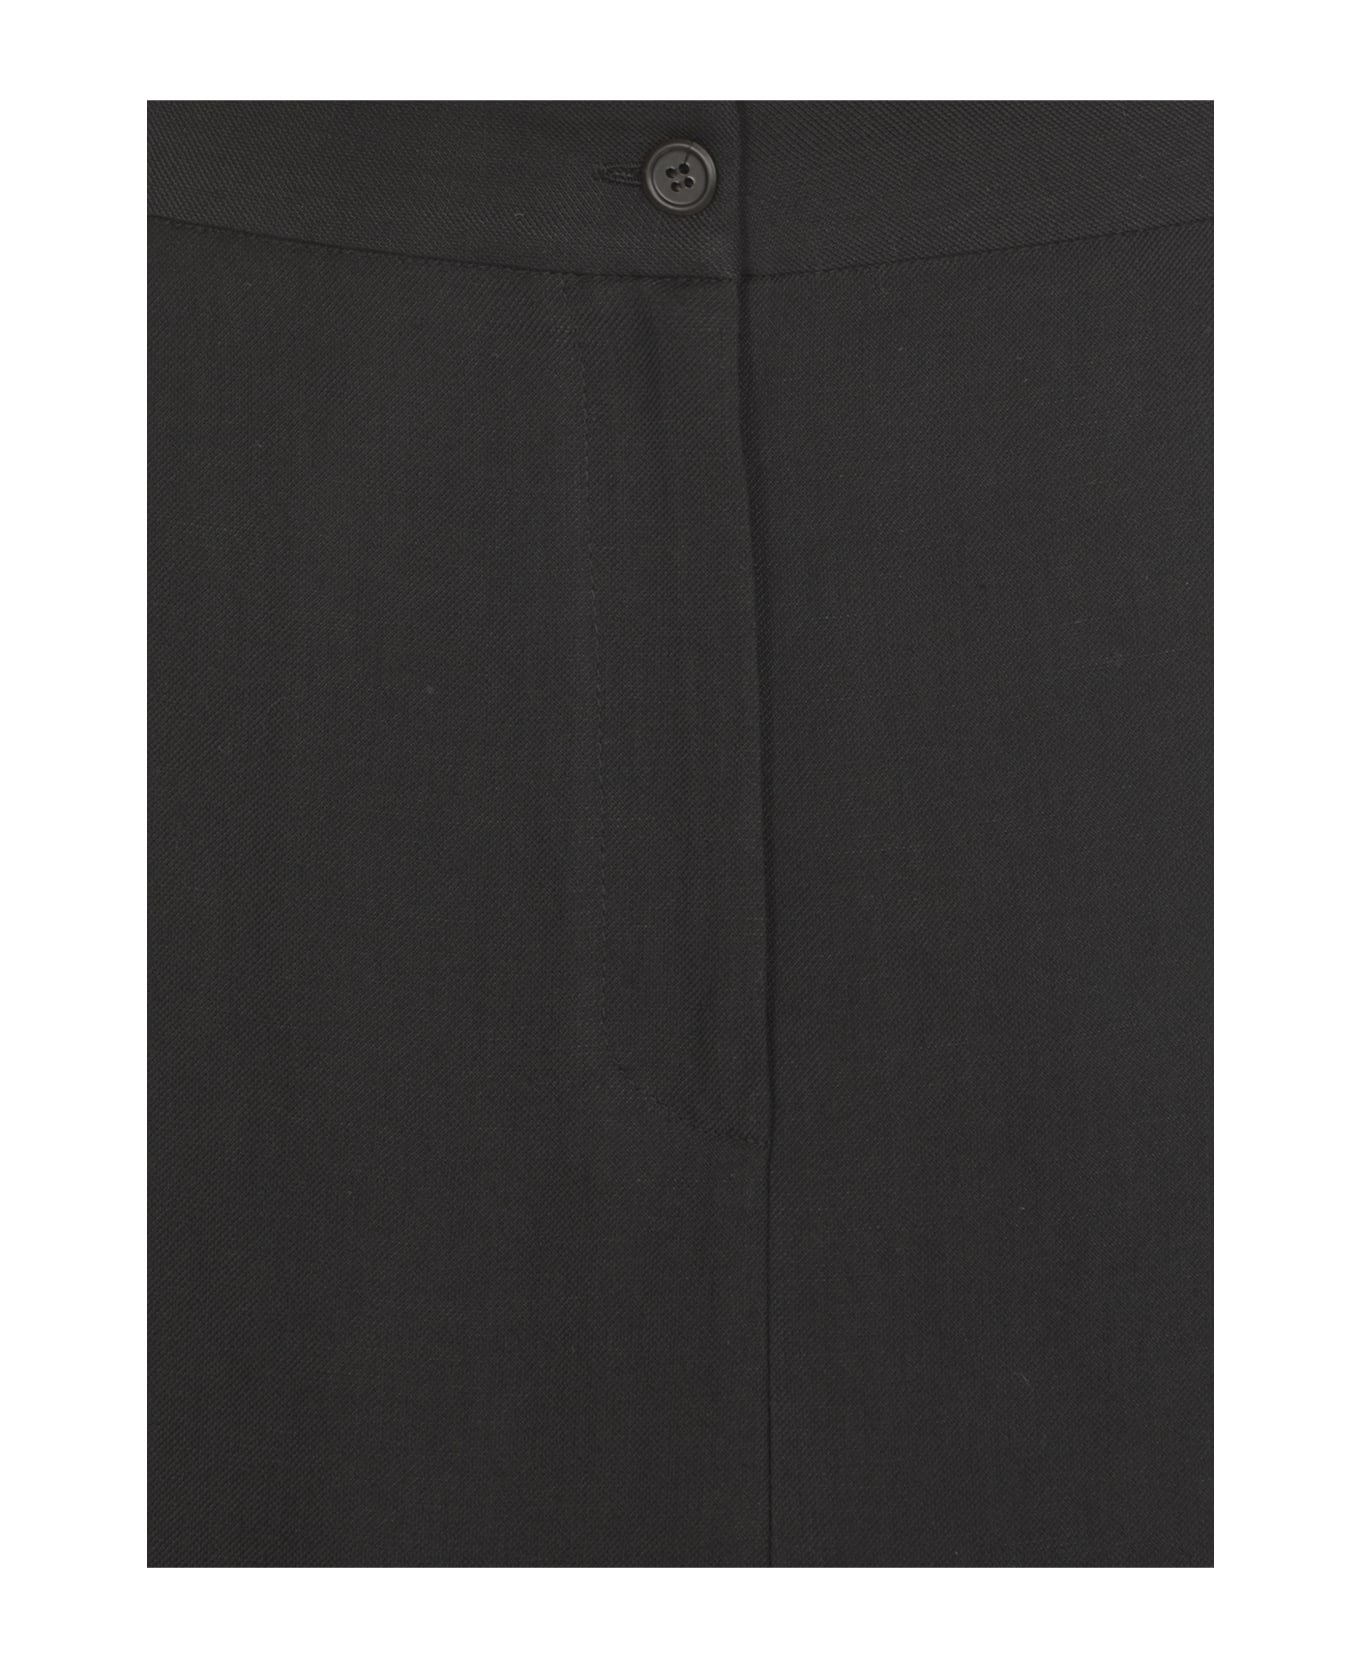 Antonelli Ippolito Skirt - Black スカート